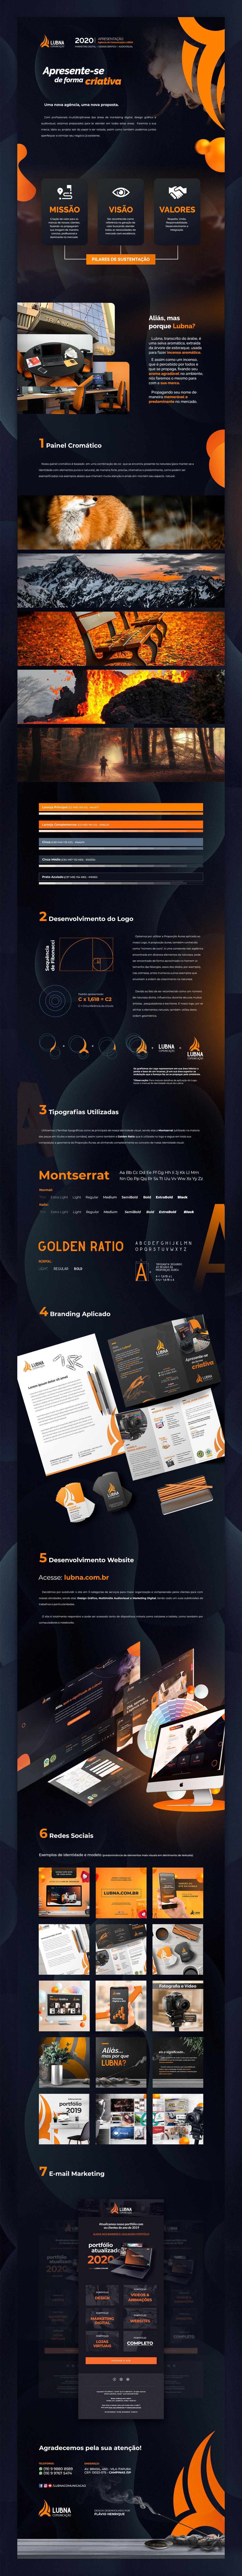 branding  design Webdesign Responsive identidade visual agency publicity orange Golden Ratio tipography